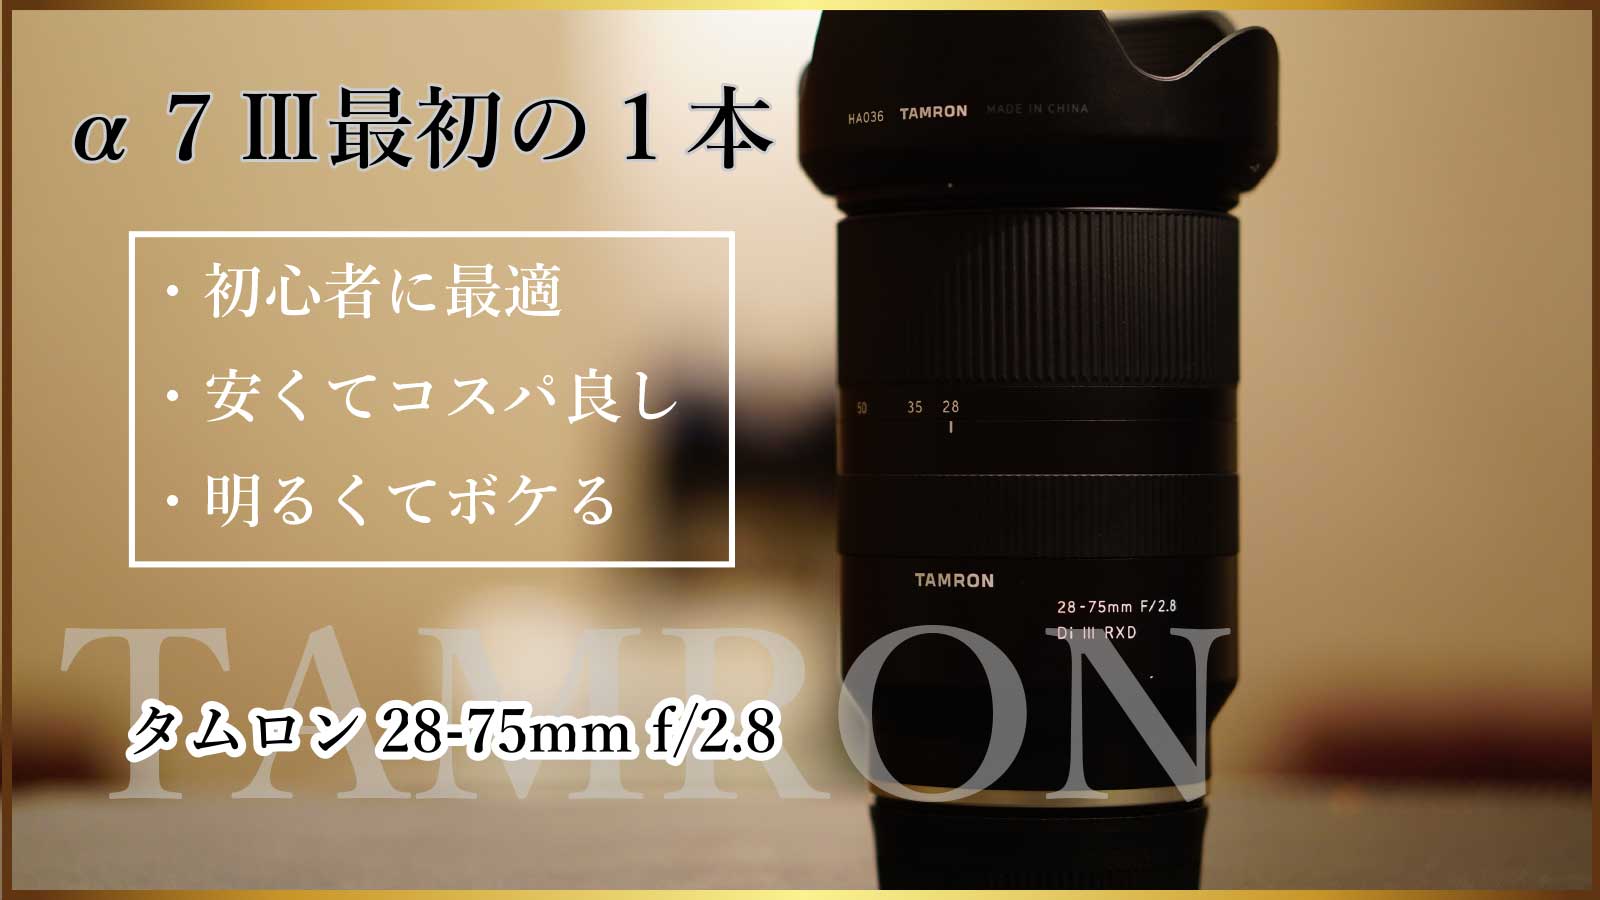 TAMRON 28-75mm F/2.8 Di III RXD】カメラ初心者がSONY α7IIIの初めの1 